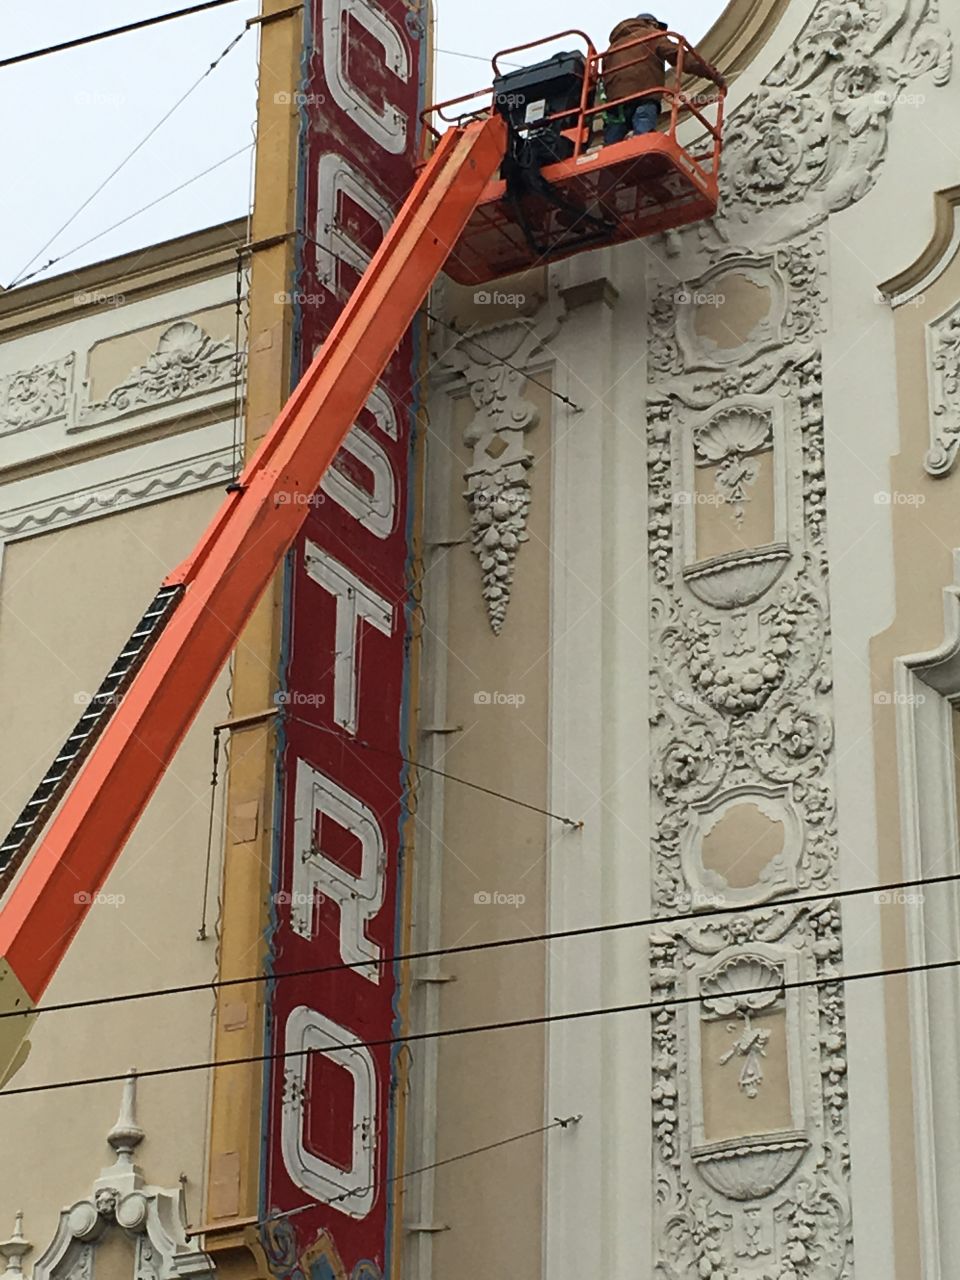 Castro Theatre Lighting Construction Workers